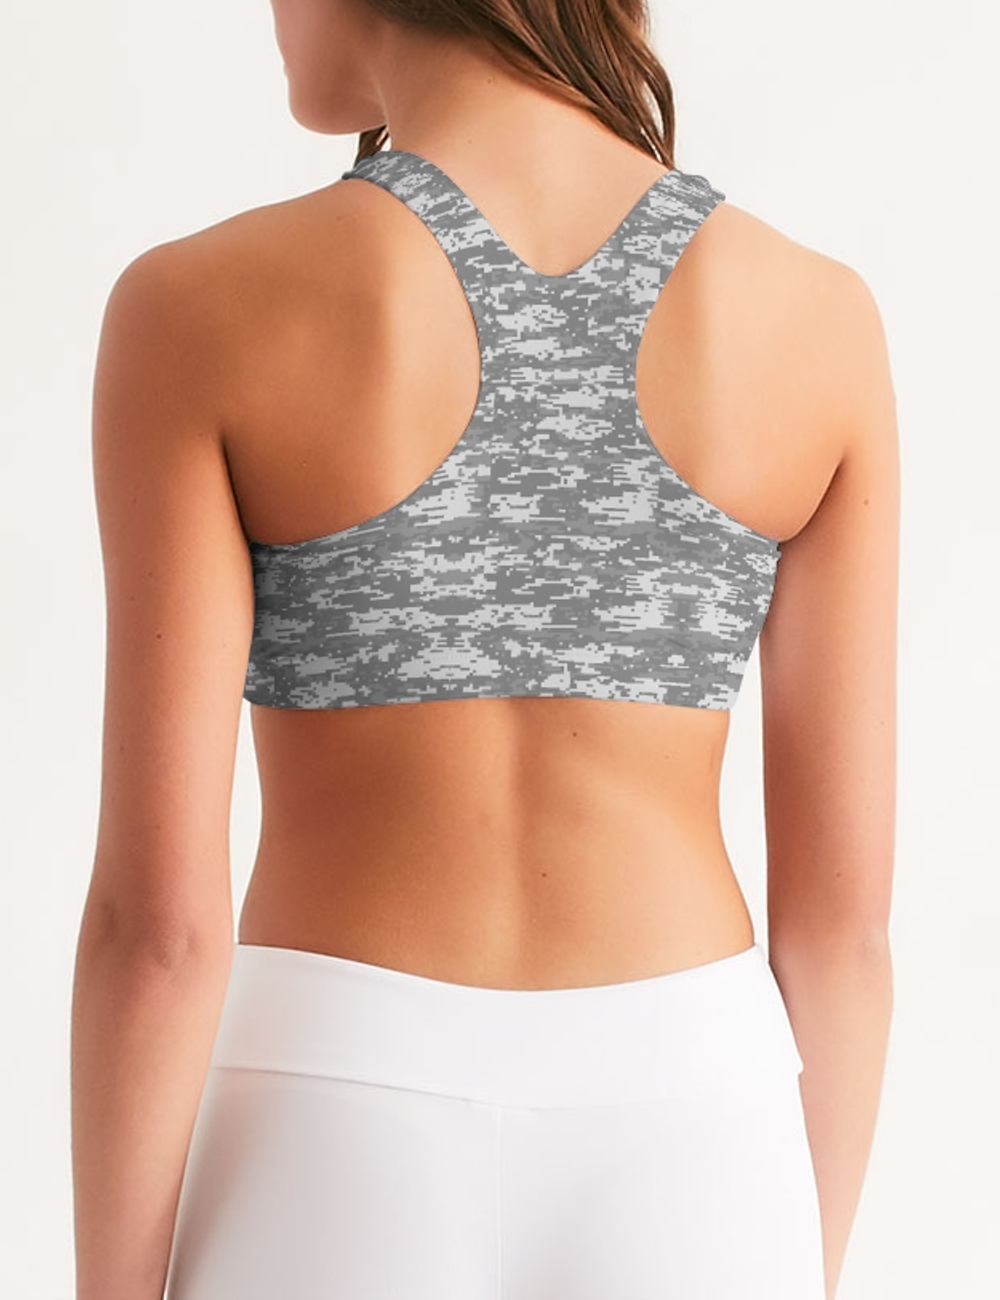 Digital Military Grey Camouflage Print | Women's Standard Sports Bra OniTakai